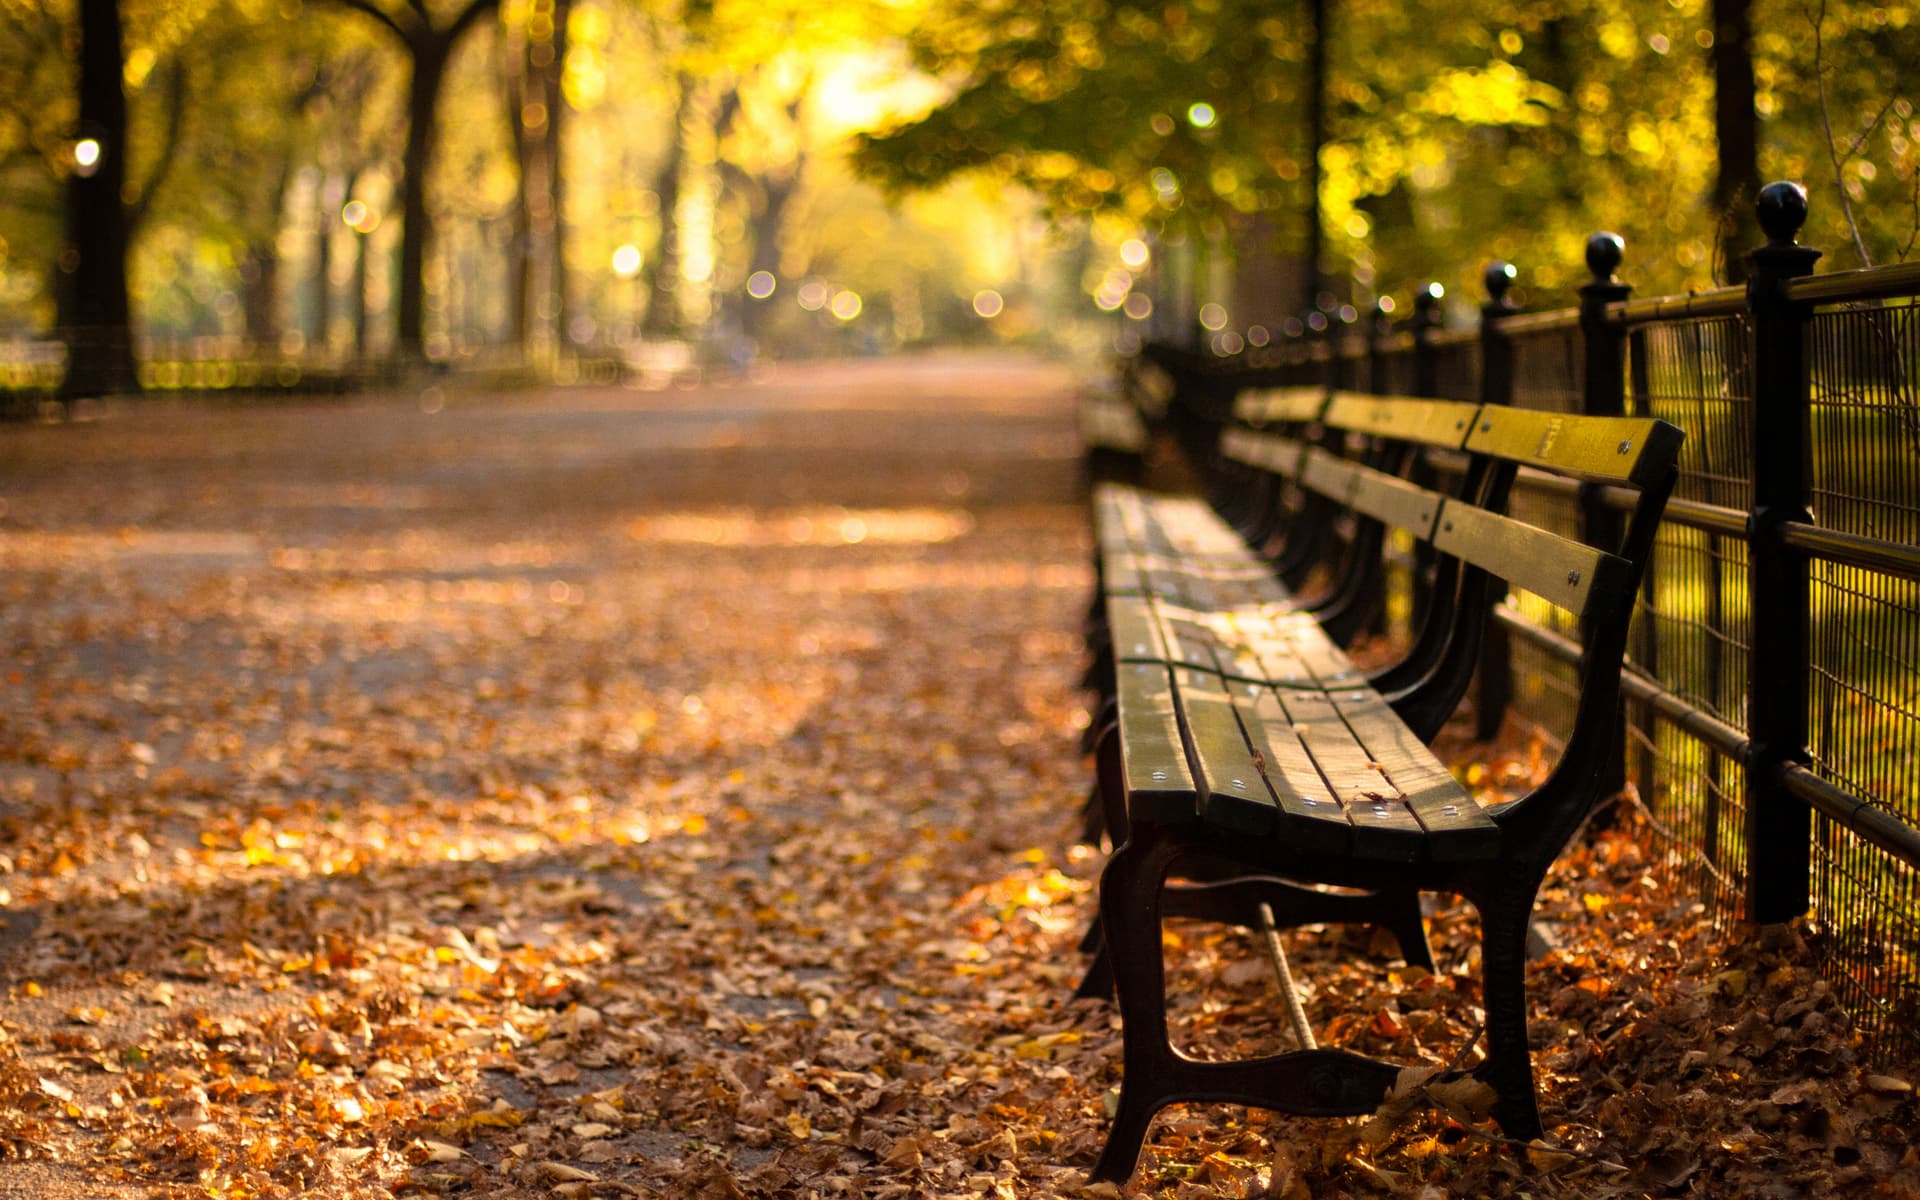 empty bench in park